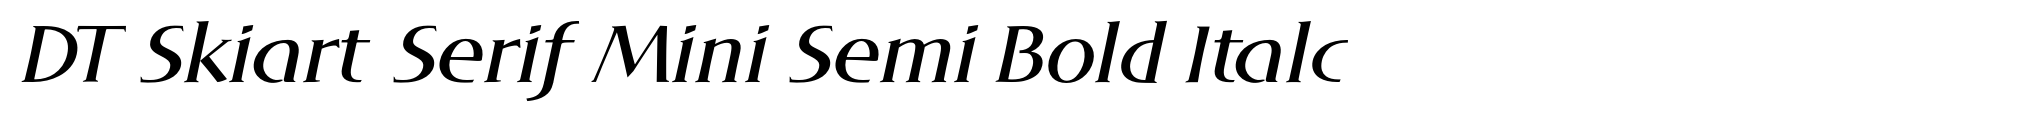 DT Skiart Serif Mini Semi Bold Italc image